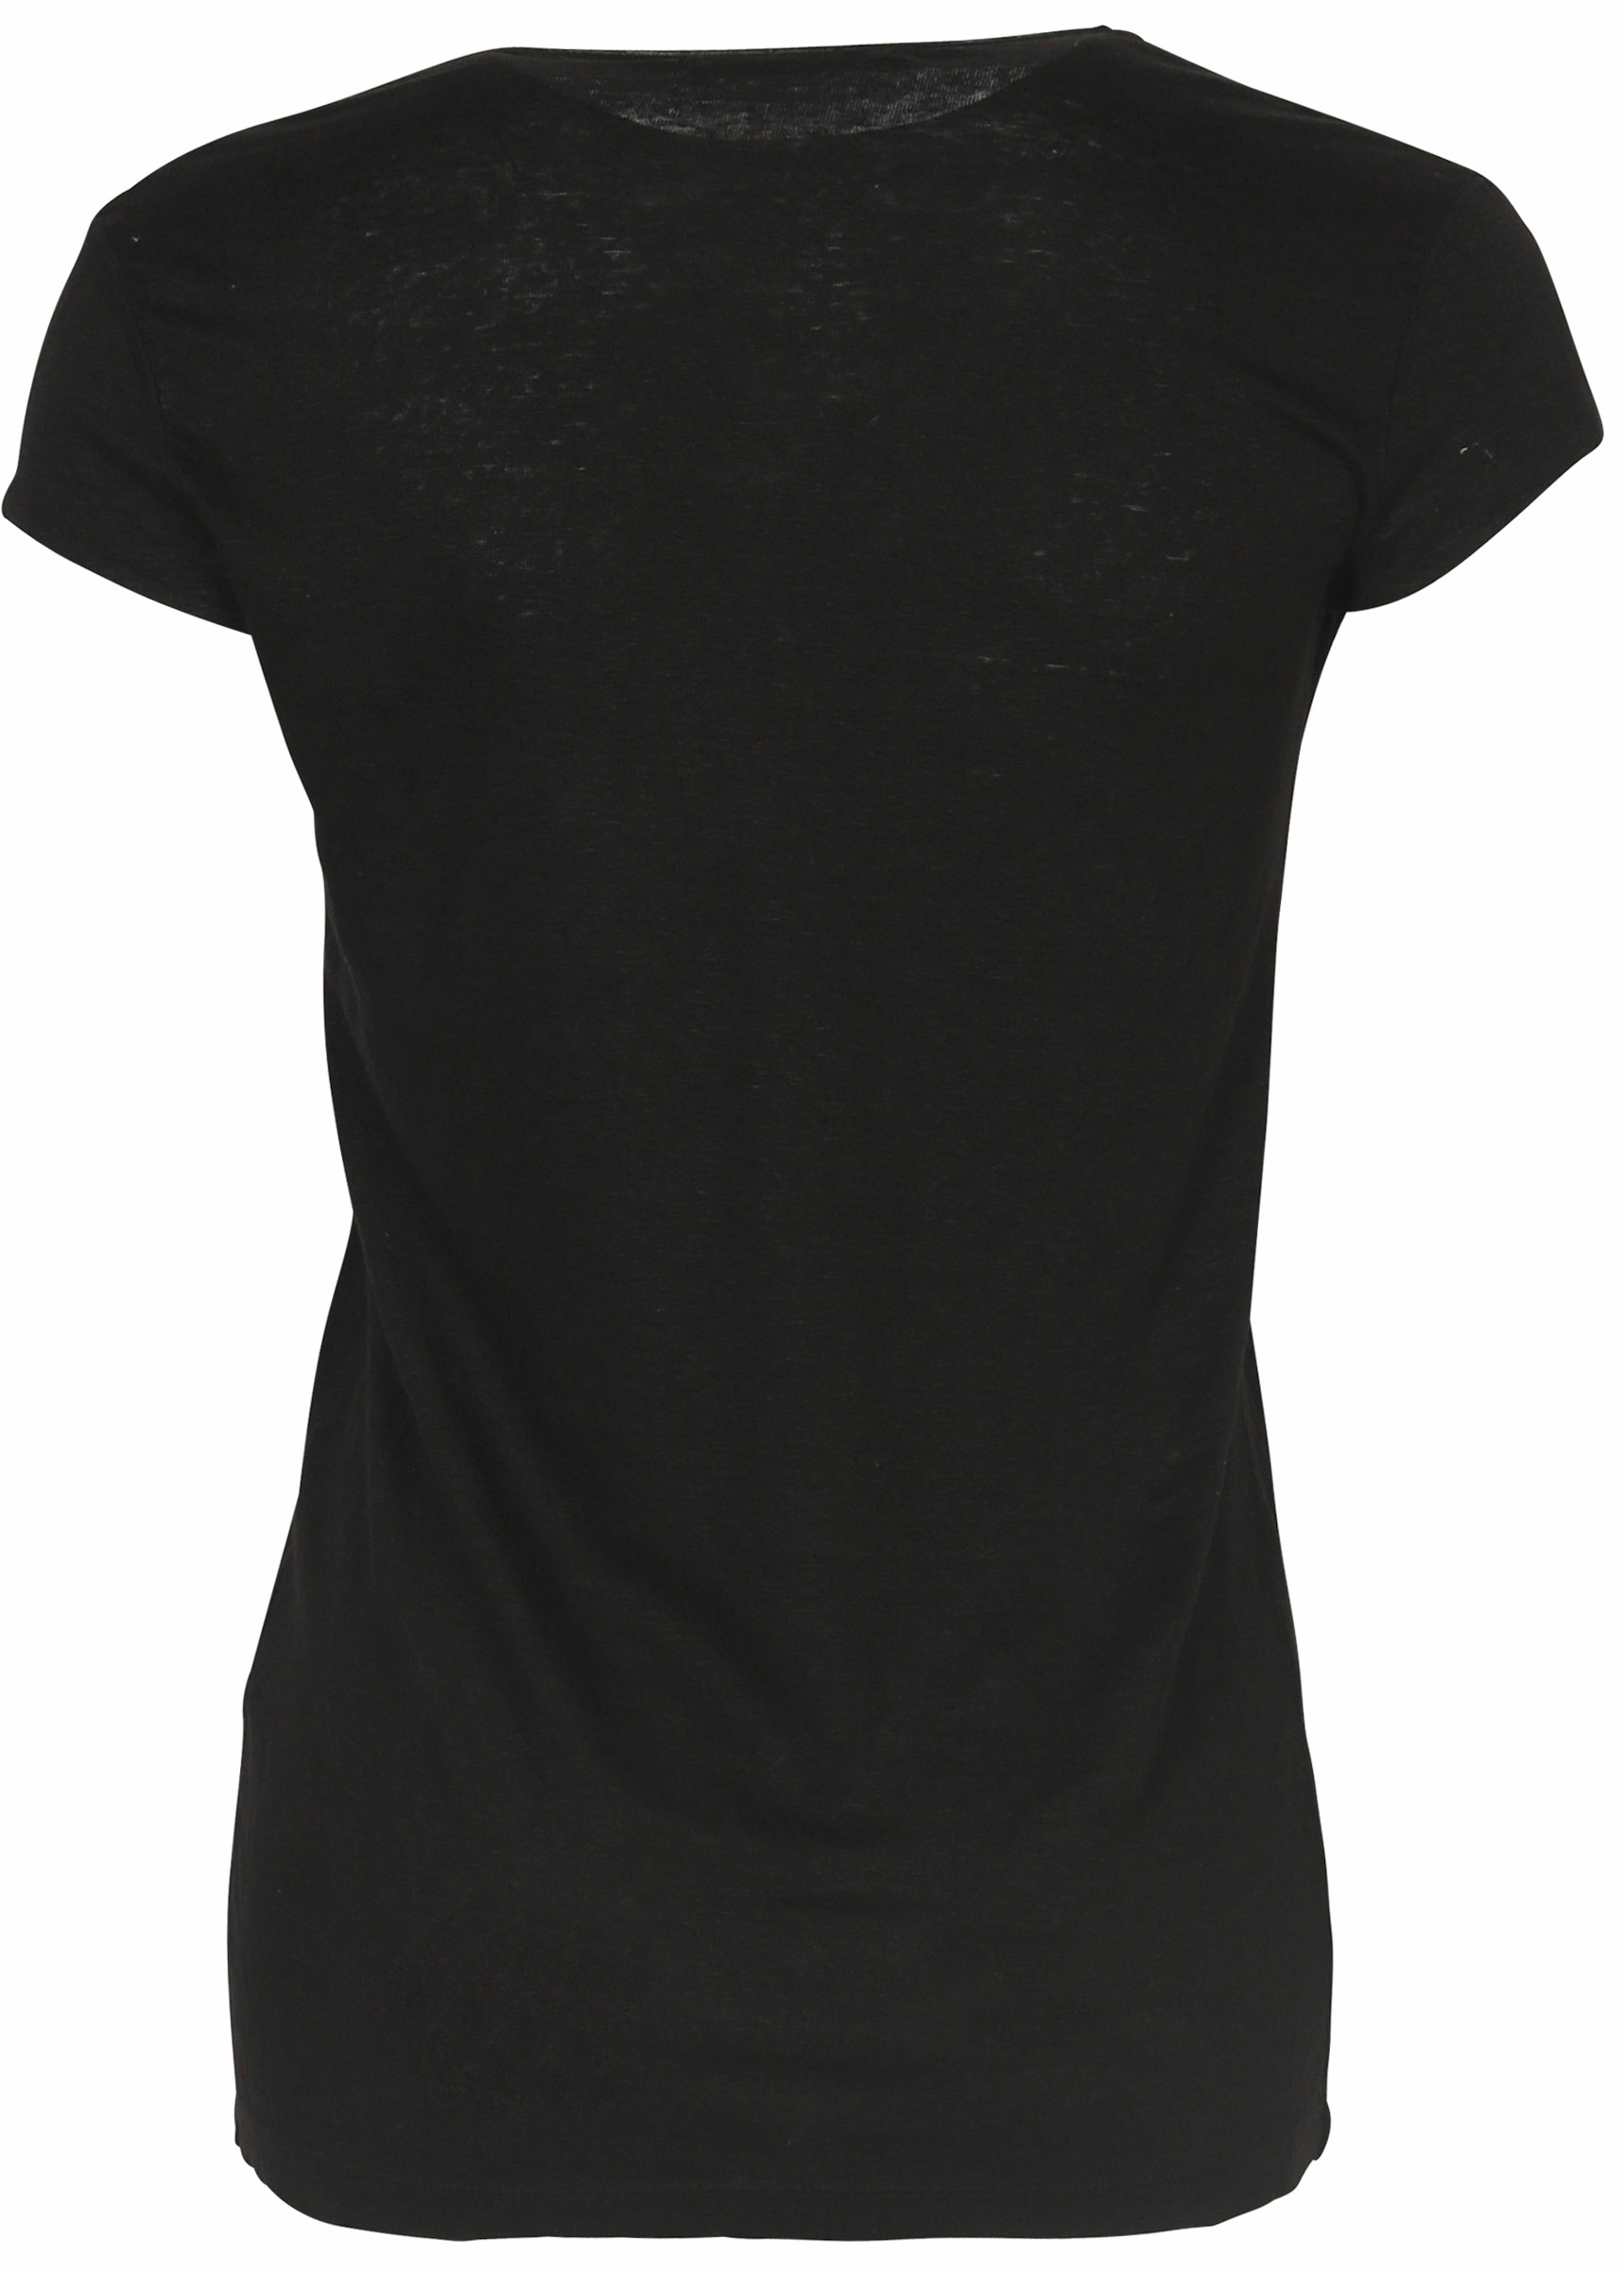 Transit T-Shirt Black Linen